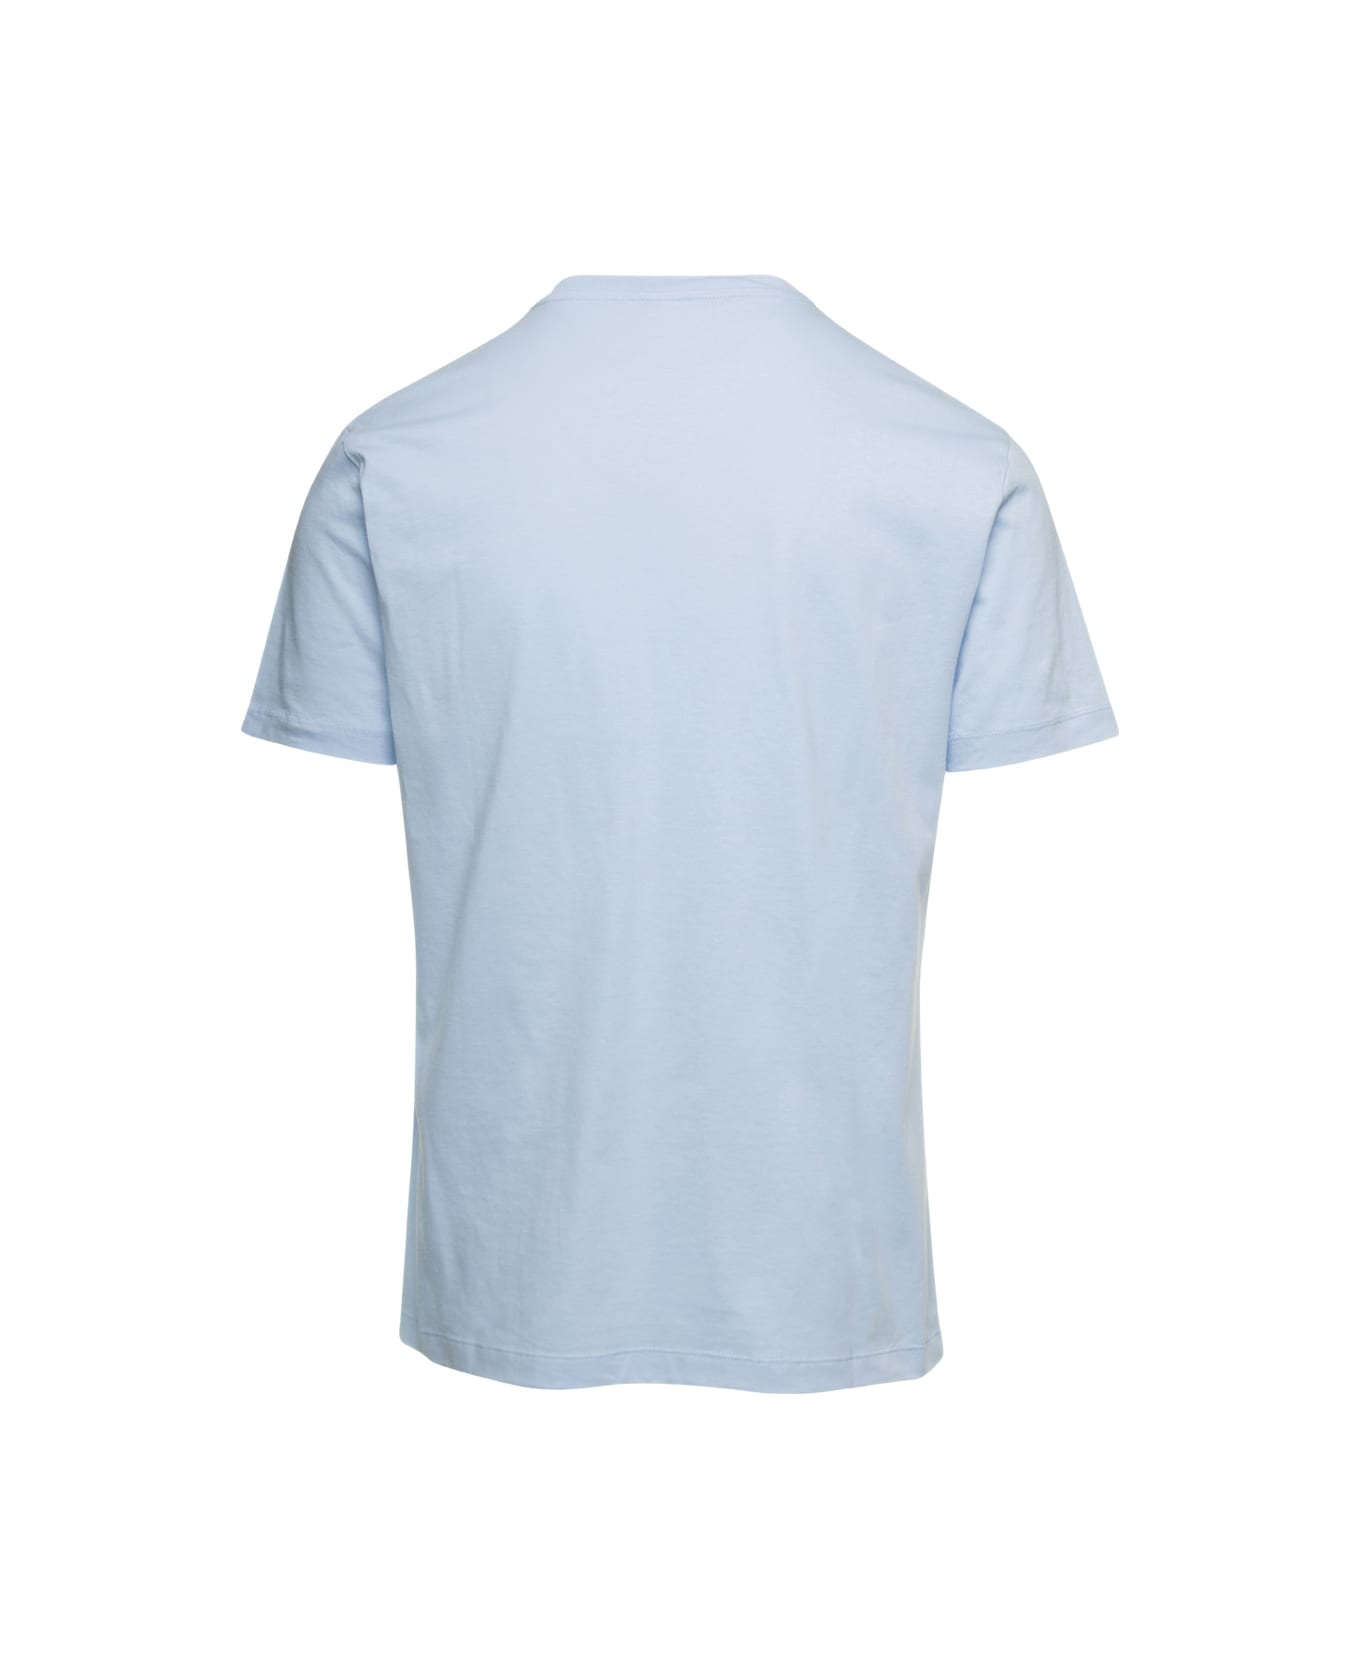 Versace Light Blue 'medusa' T-shirt With Front Logo Print In Cotton Man - Light blue